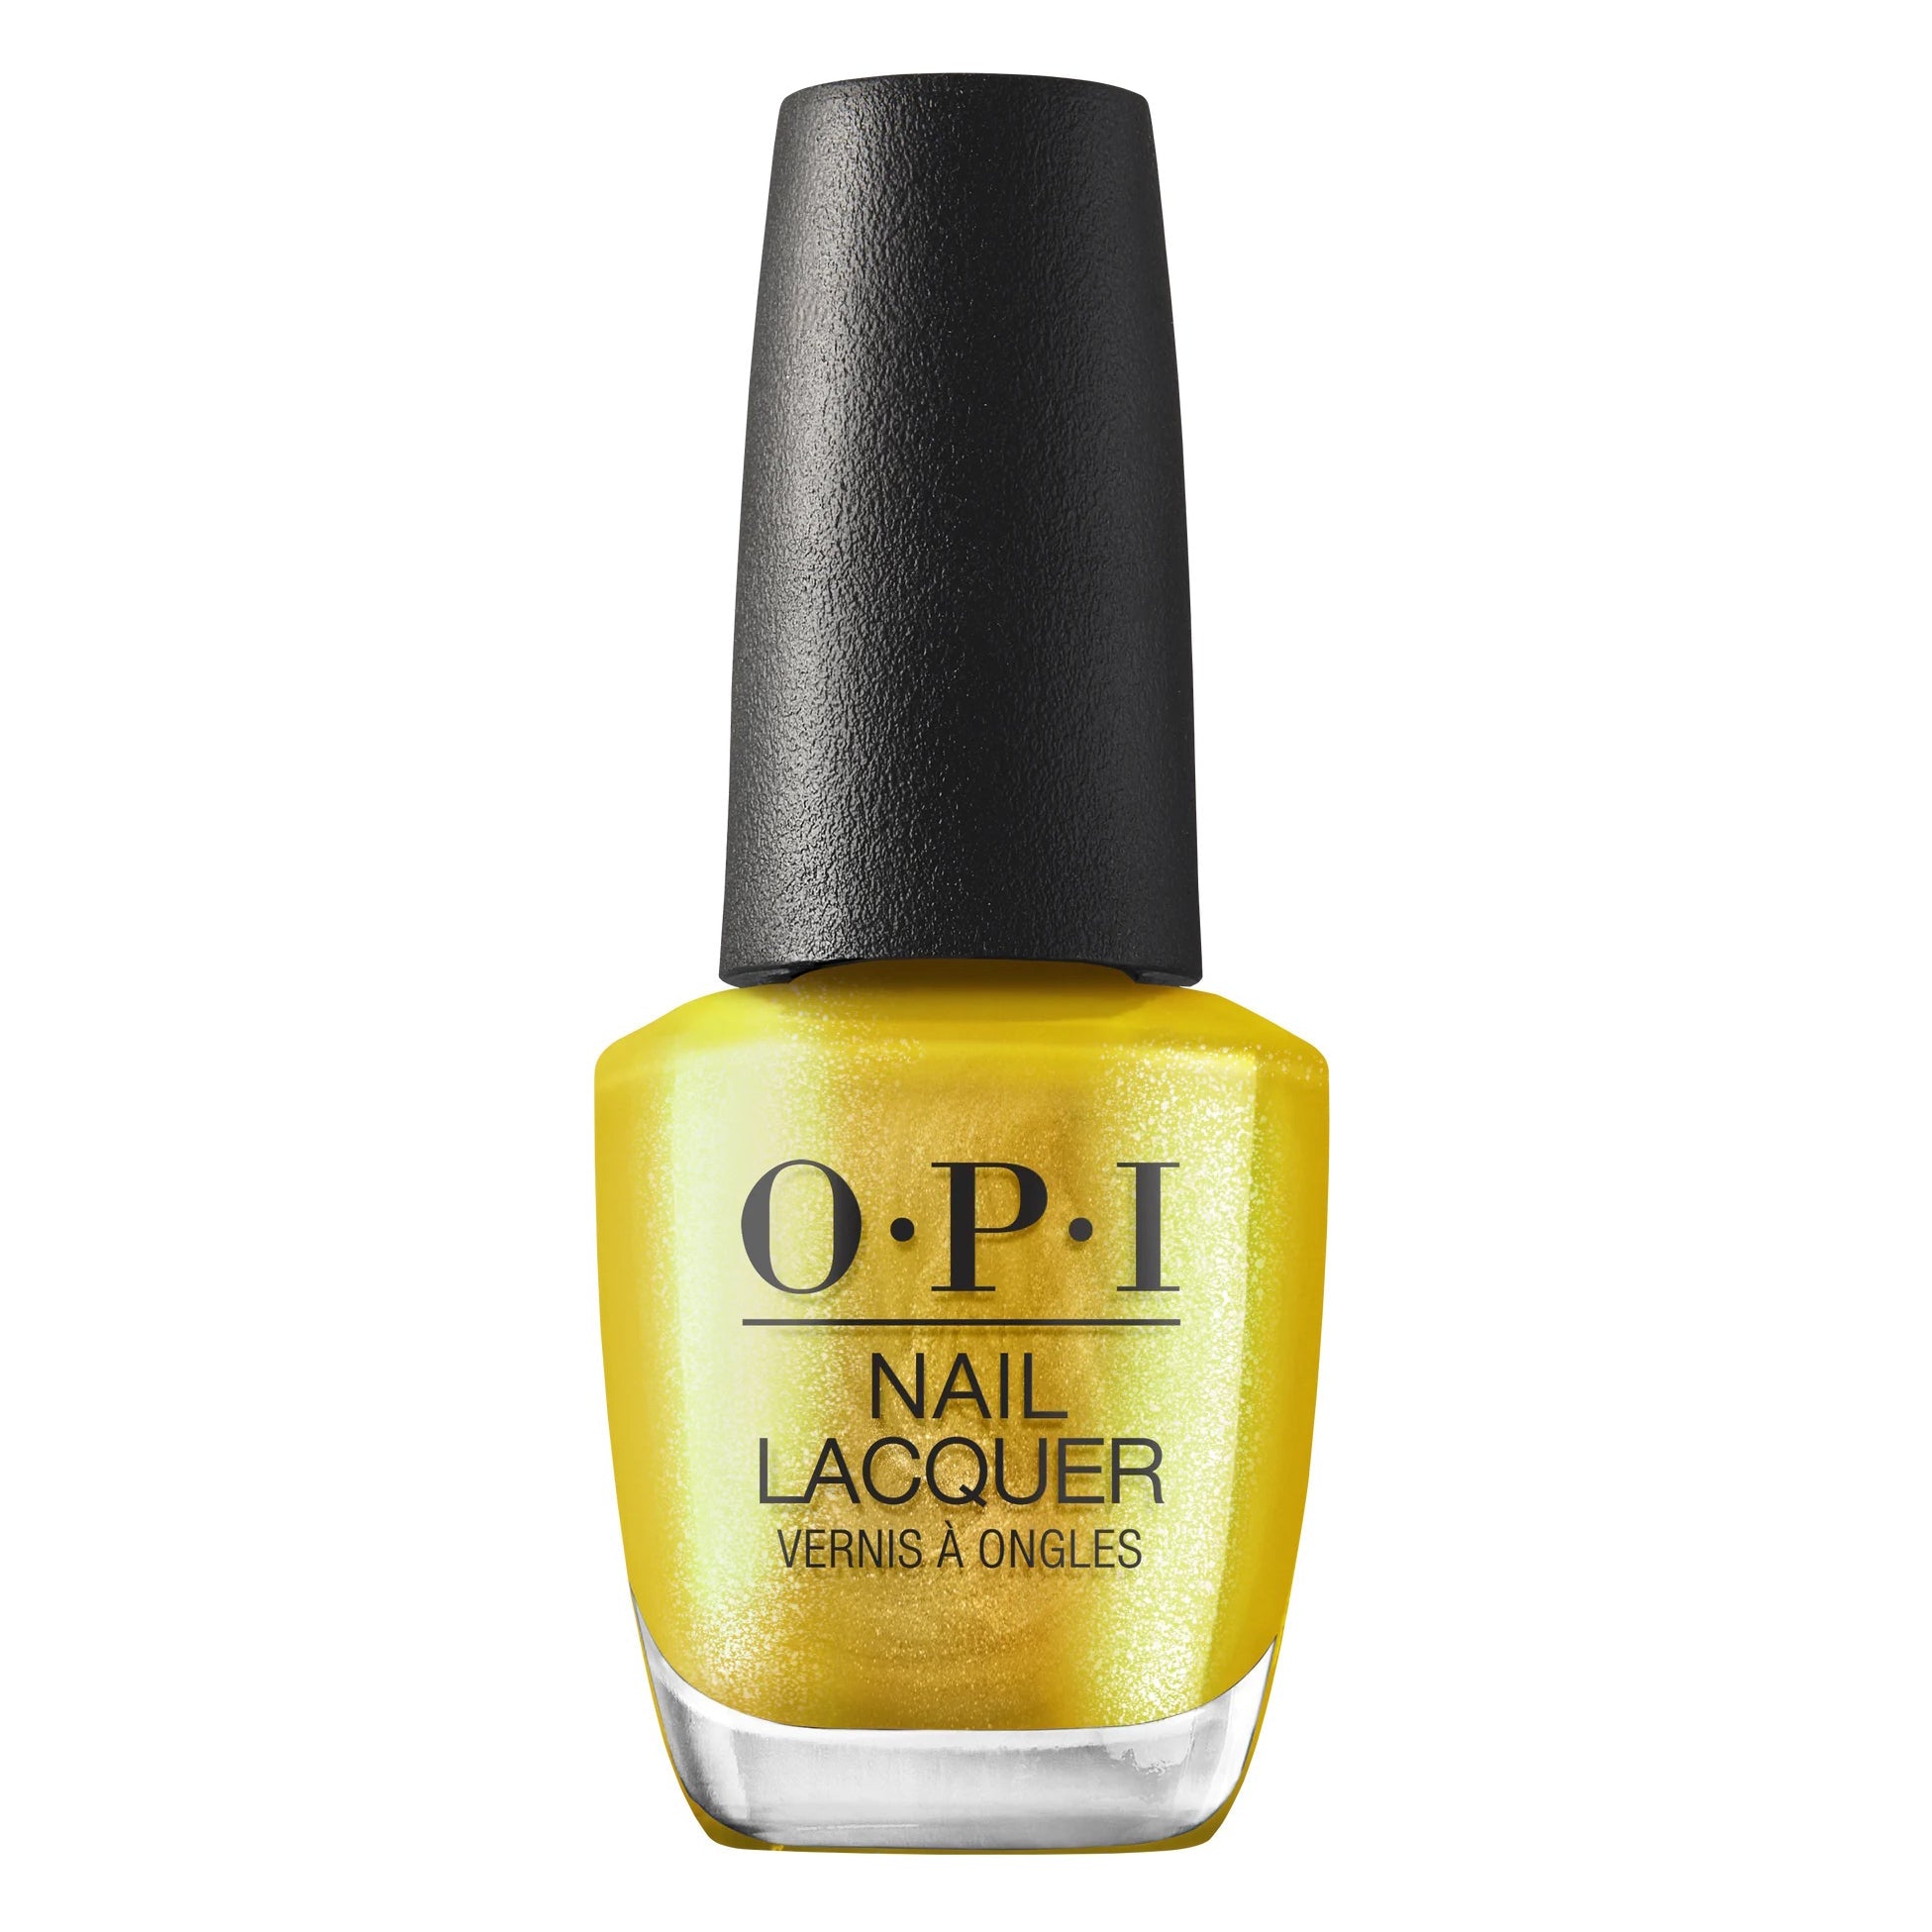 OPI Nail Lacquer, Just Lanai-ing Around, Nail Polish, 0.5 fl oz -  Walmart.com